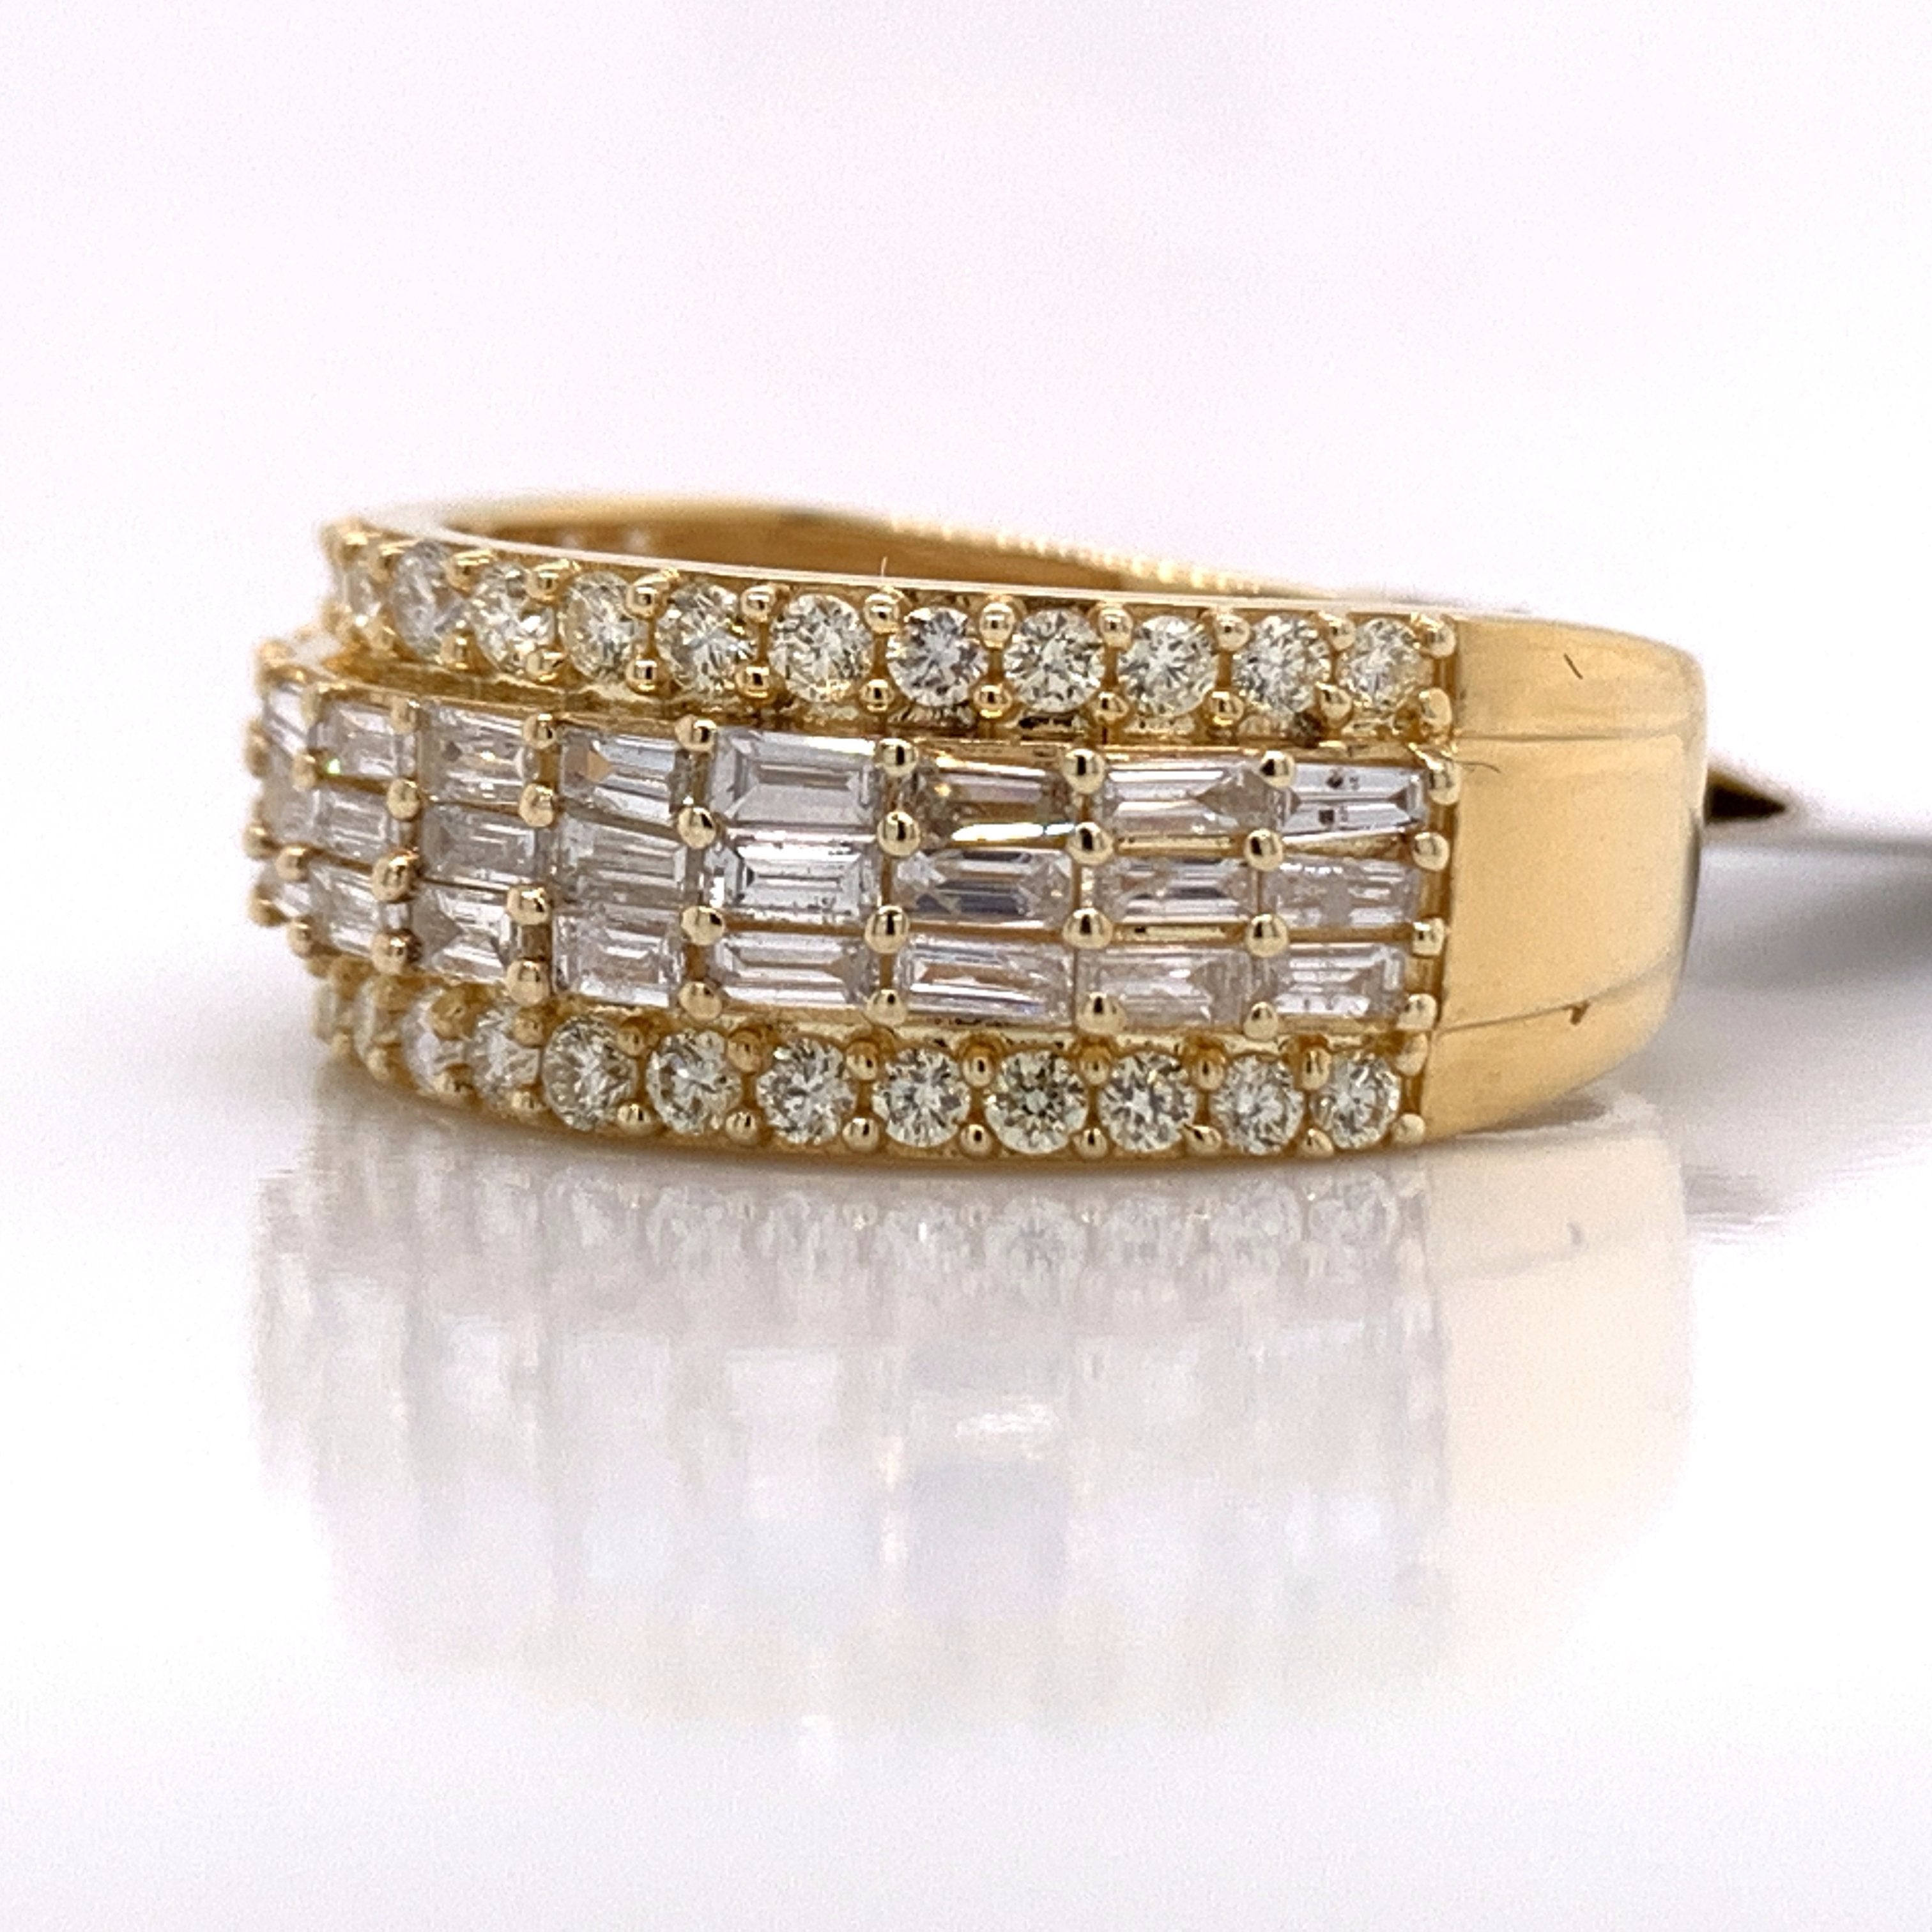 1.92 CT. Diamond Ring in 10K Gold - White Carat Diamonds 